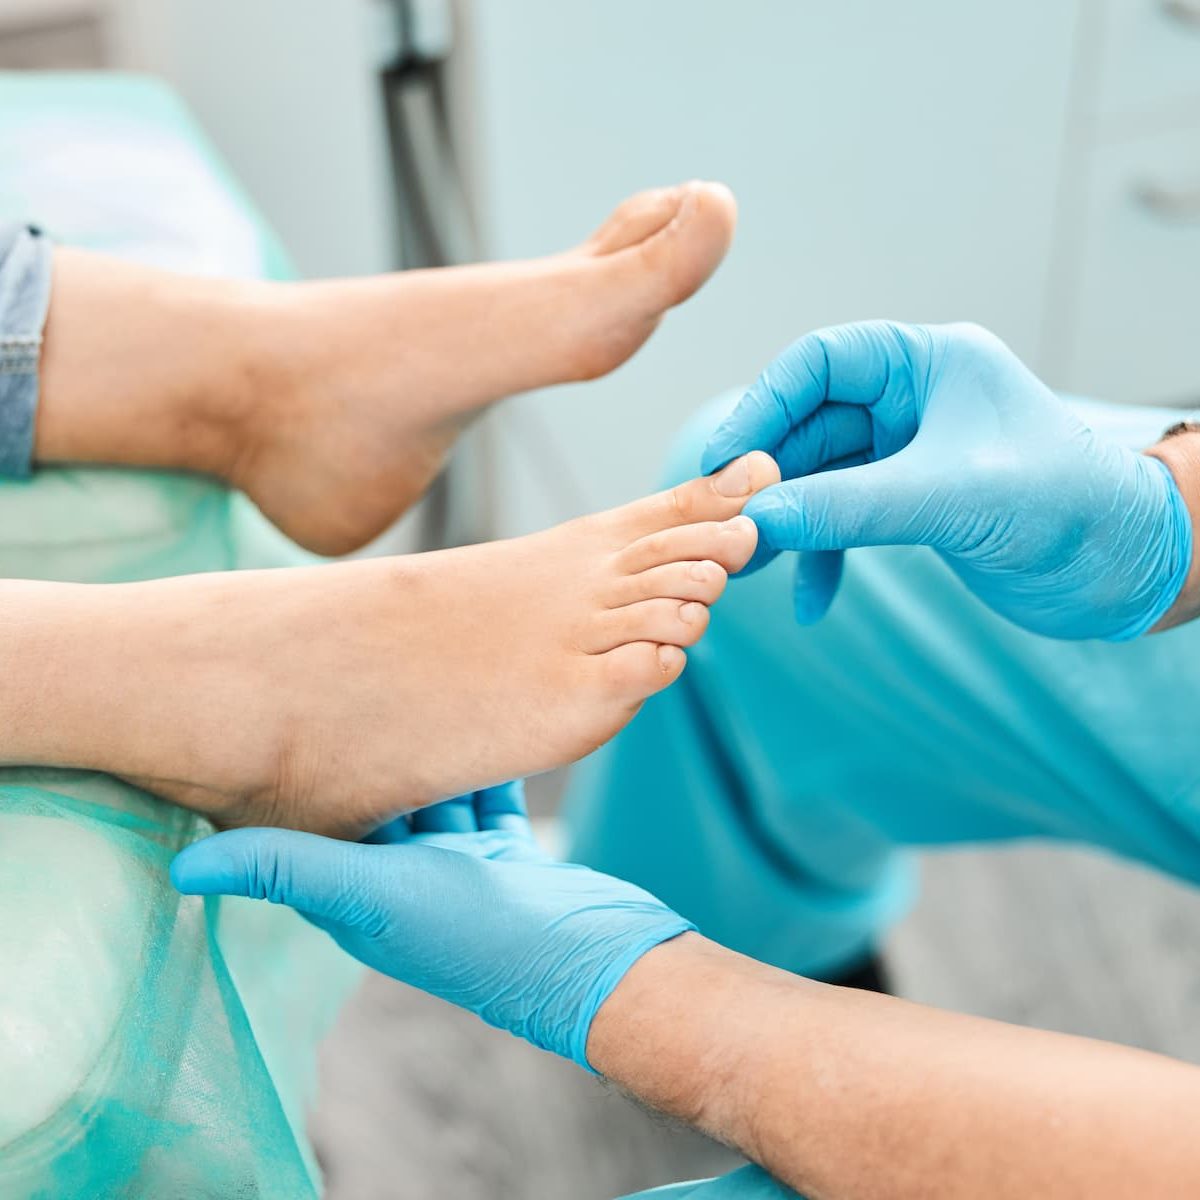 How to fix an ingrown toenail